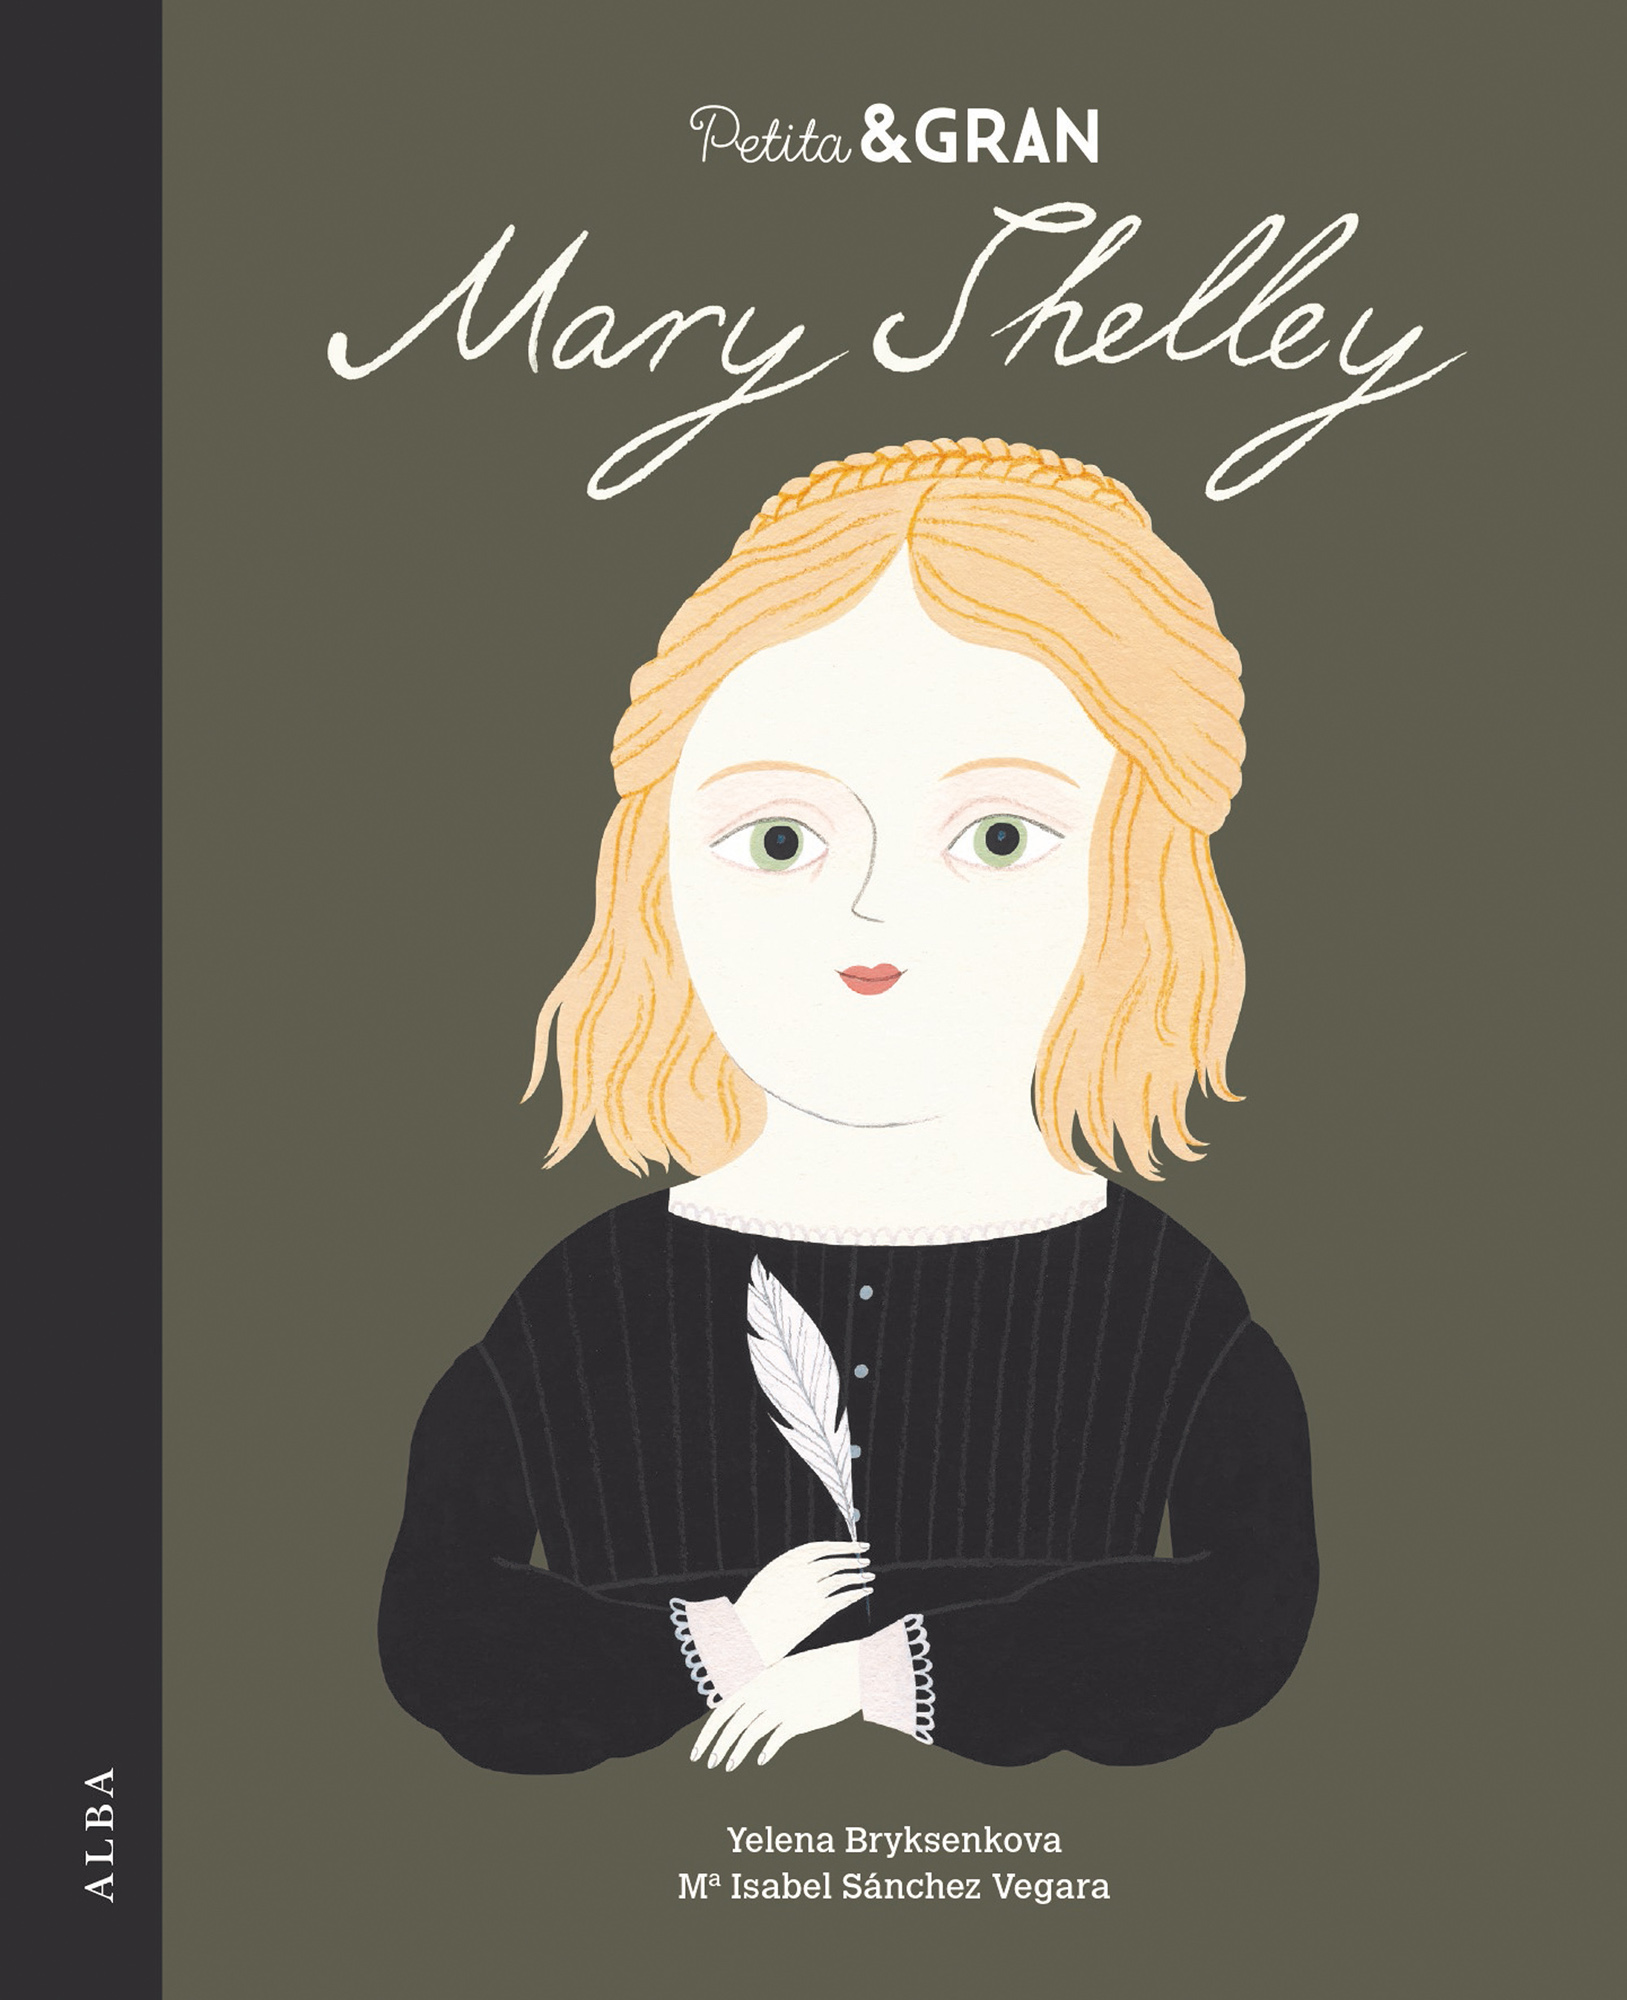 Petita & Gran Mary Shelley (9788490656044)